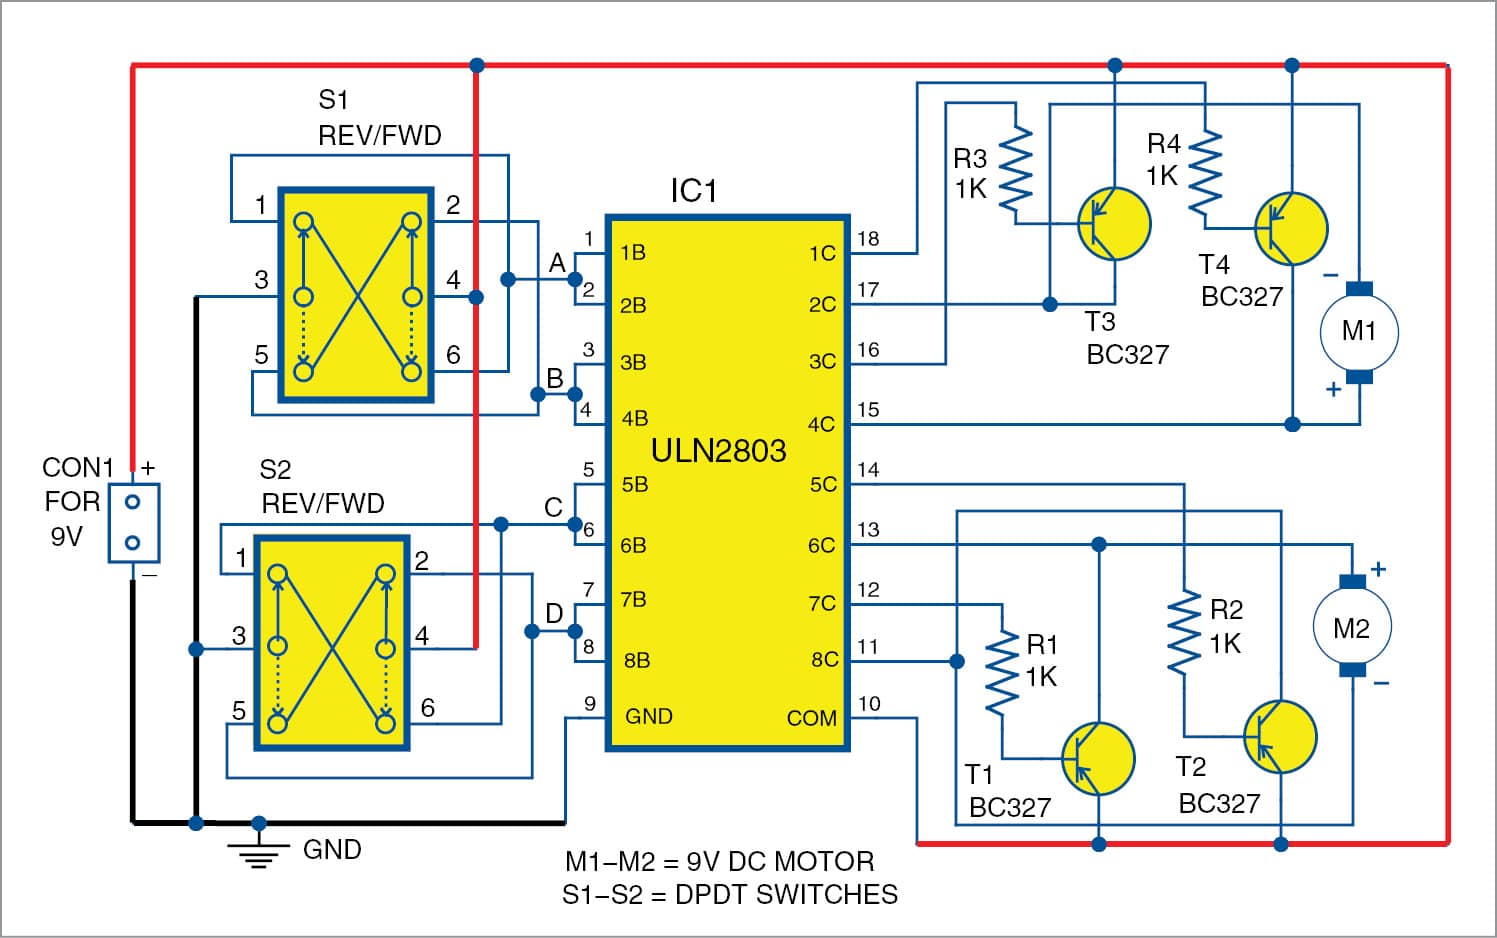 Circuit of bi-directional DC motor control